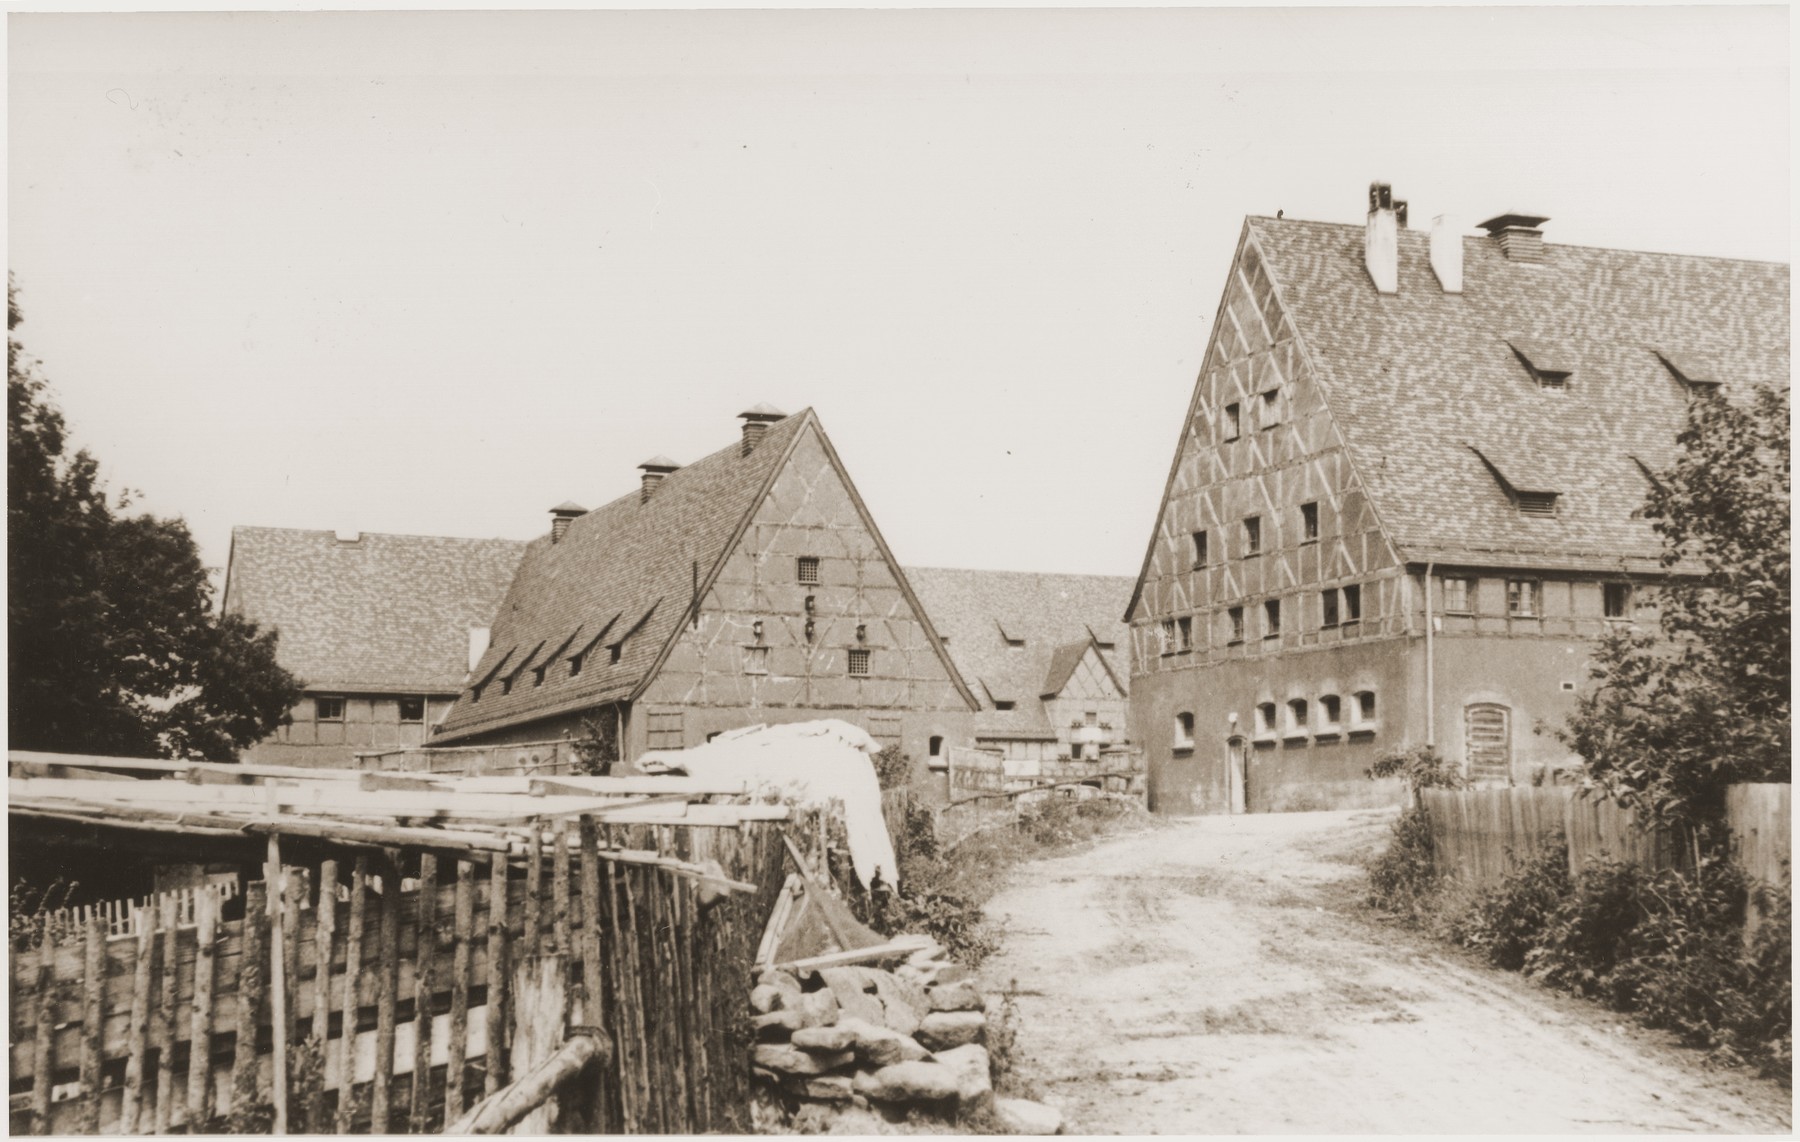 View of the Kibbutz Nili hachshara (Zionist collective) in Pleikershof, Germany